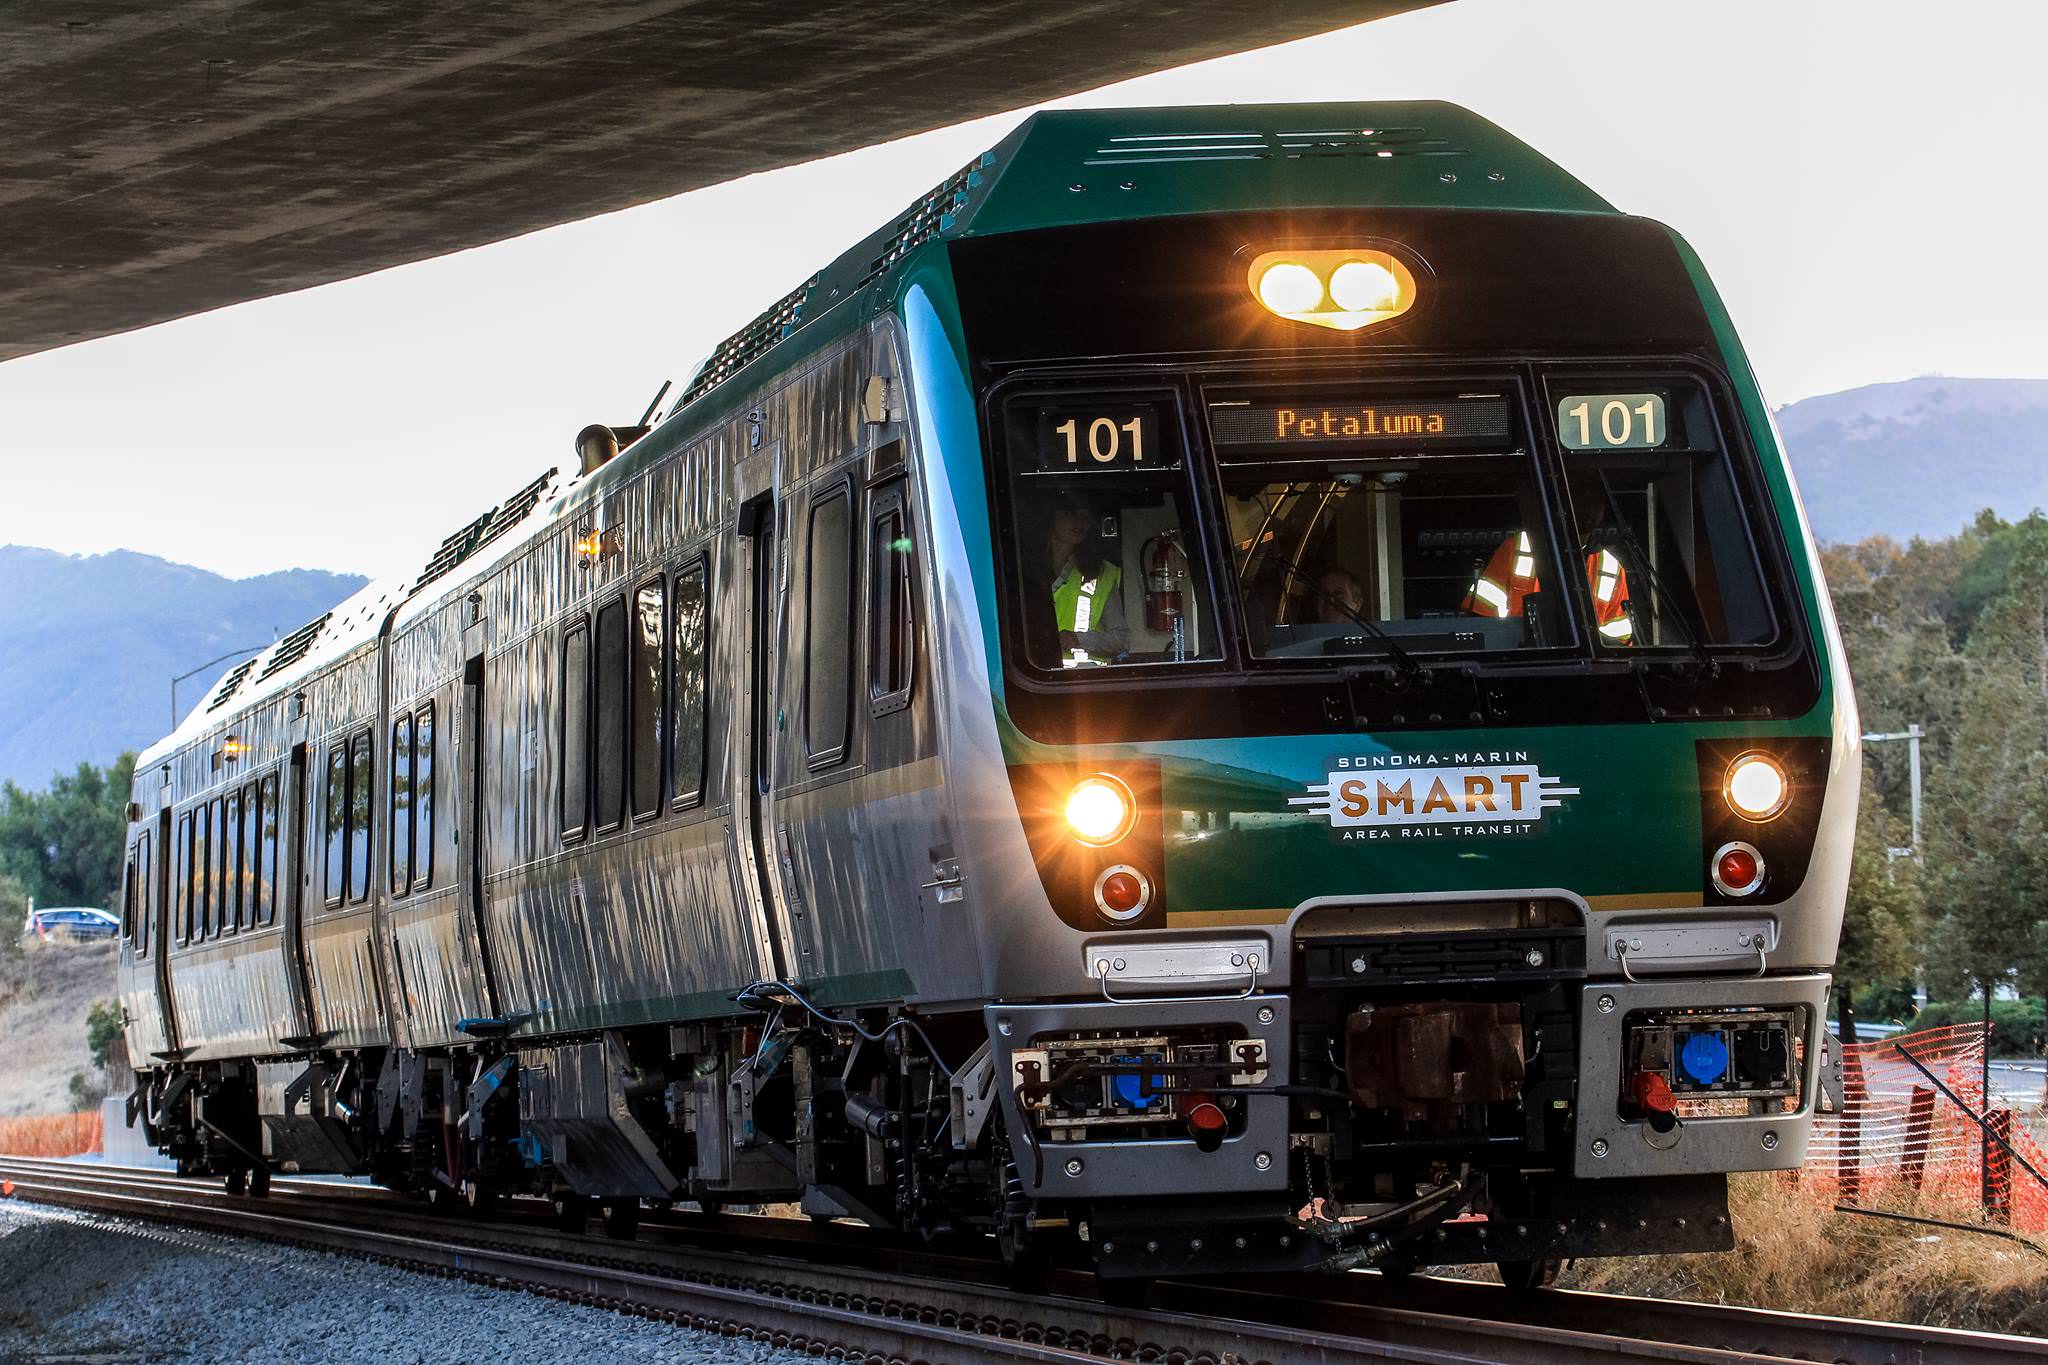 SMART train service launches in San Francisco | Global Rail News